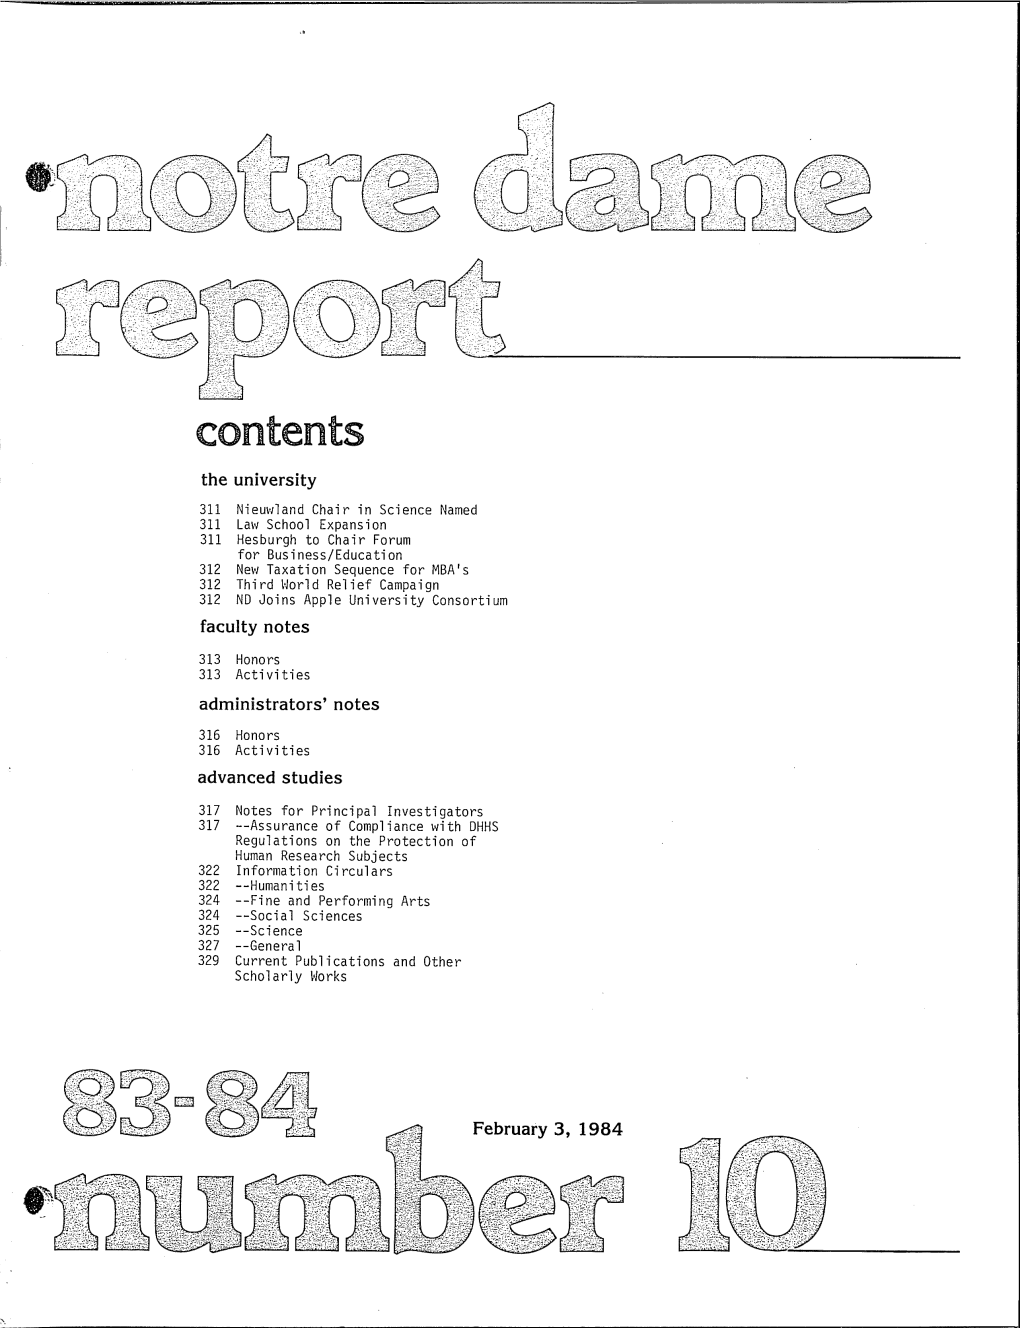 NDR-1984-02-03.Pdf